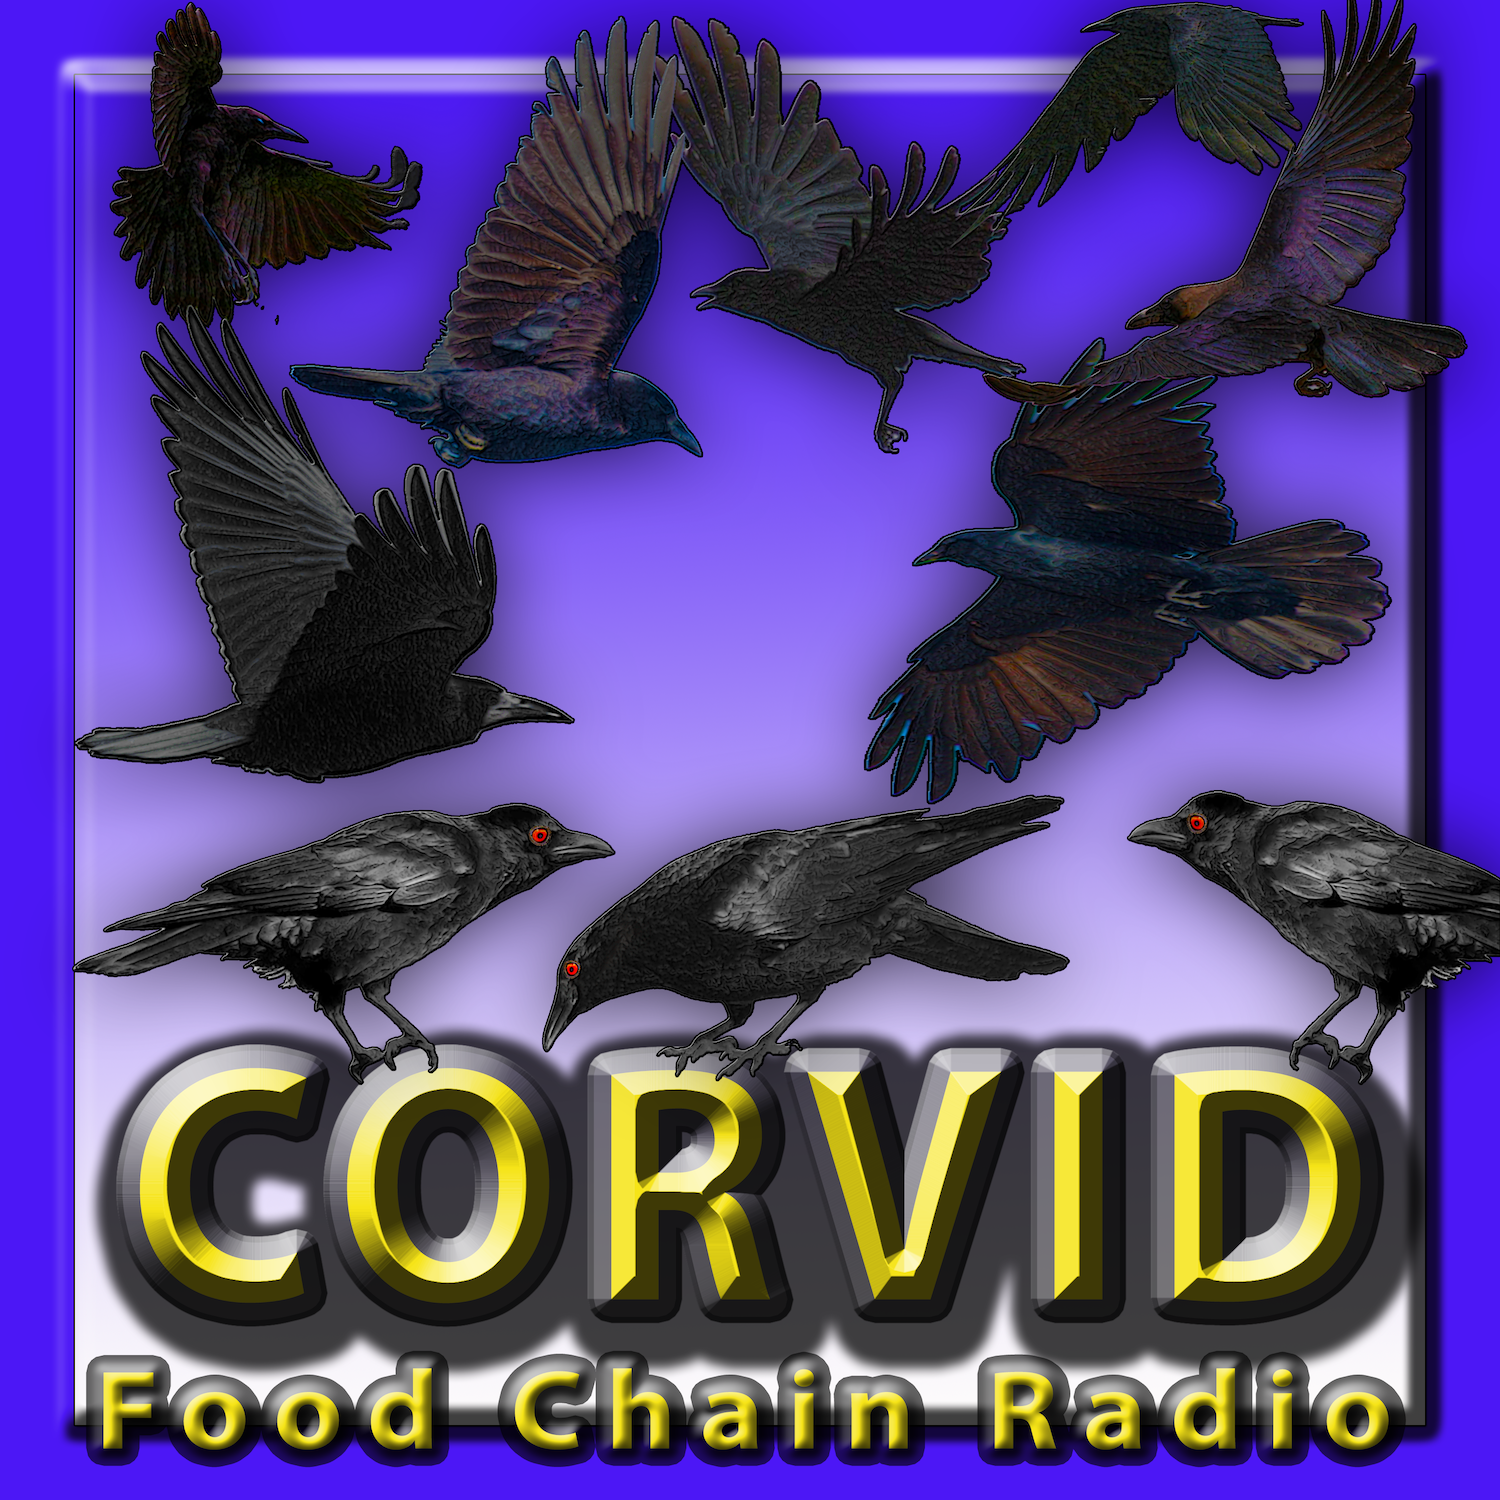 Michael Olson Food Chain Radio – Corvid